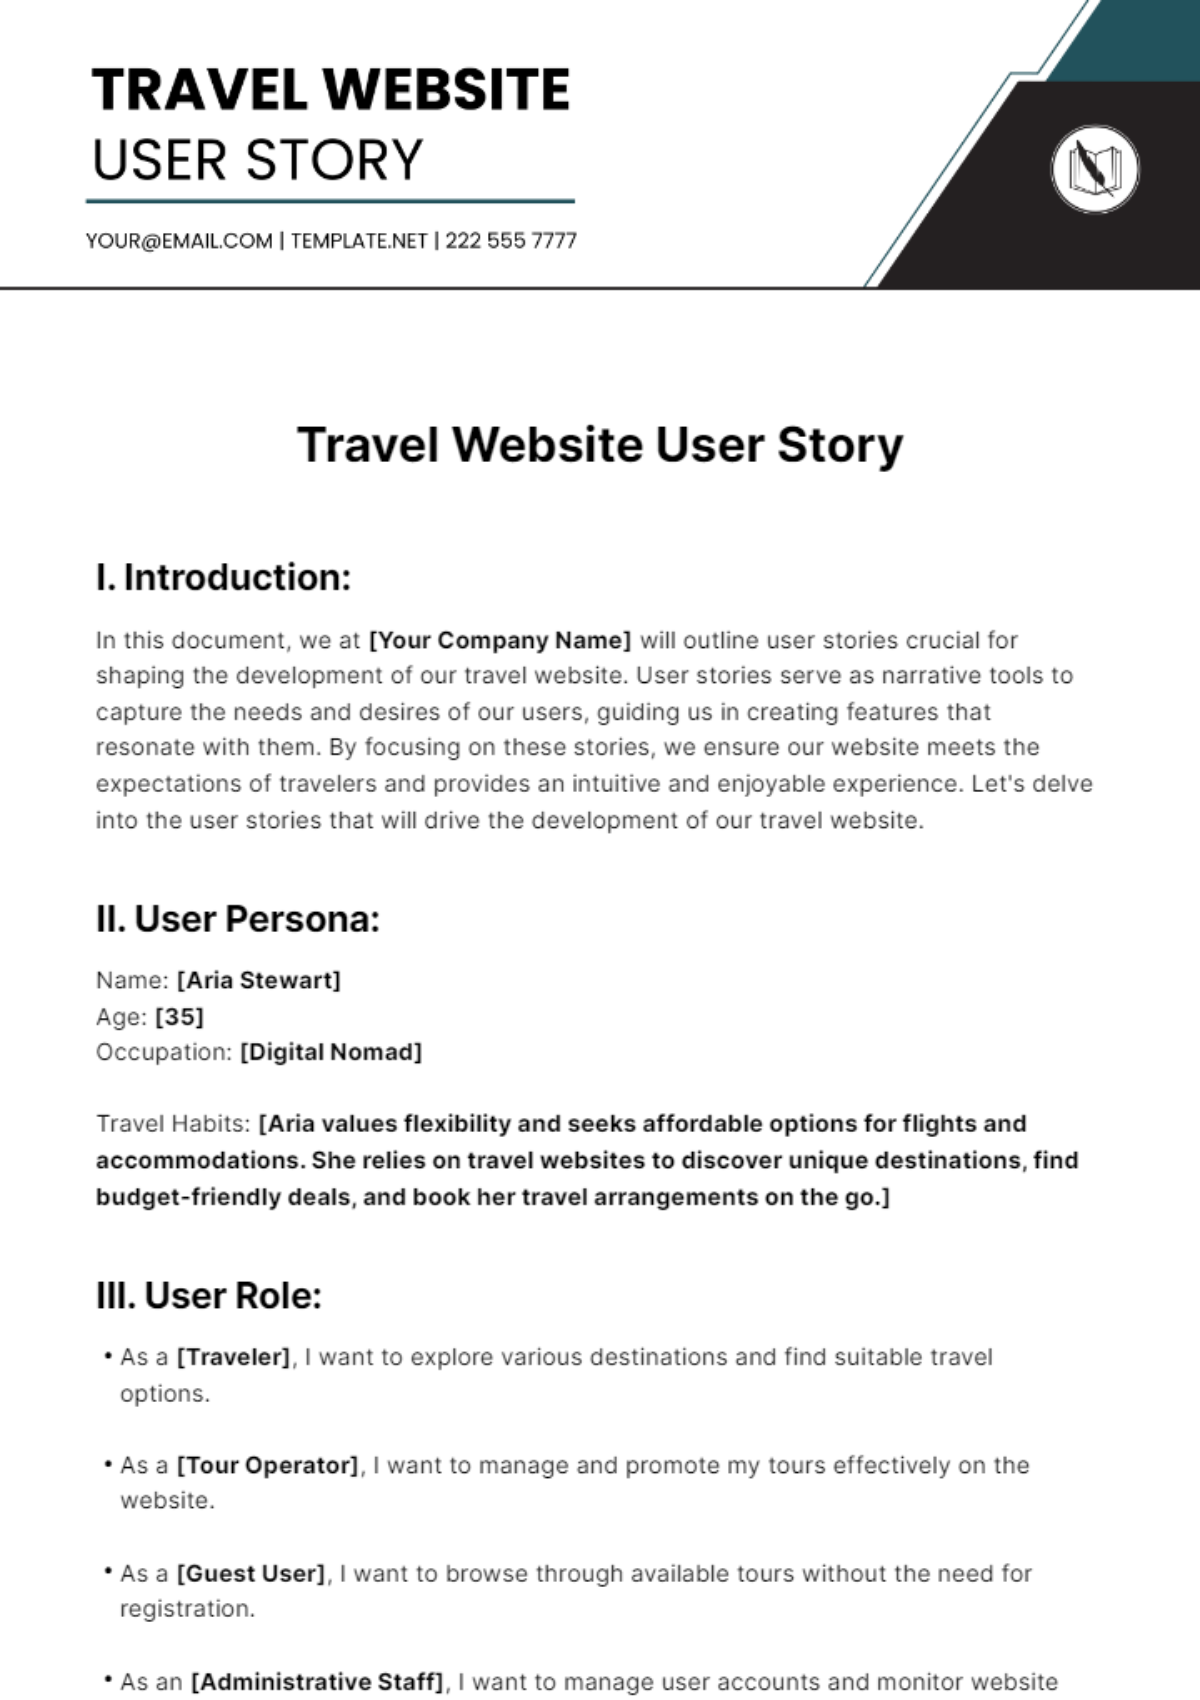 Travel Website User Story Template